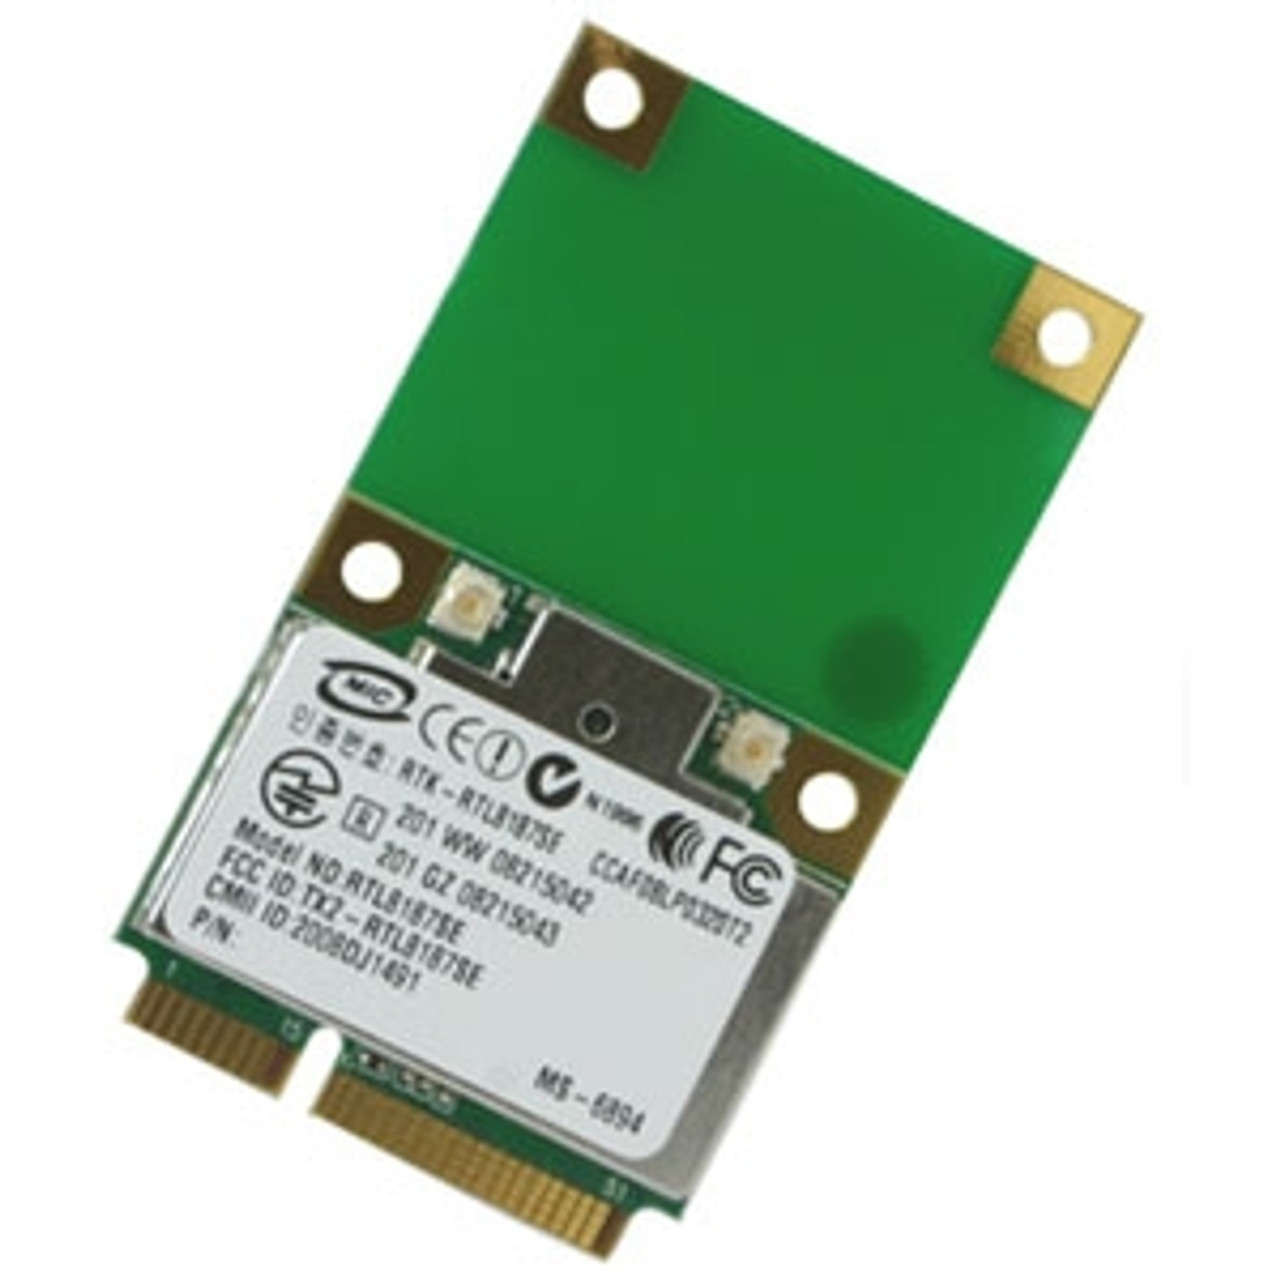 MS-6894-010 MSI MN54G2 Wireless-G PCIe Mini Network Card